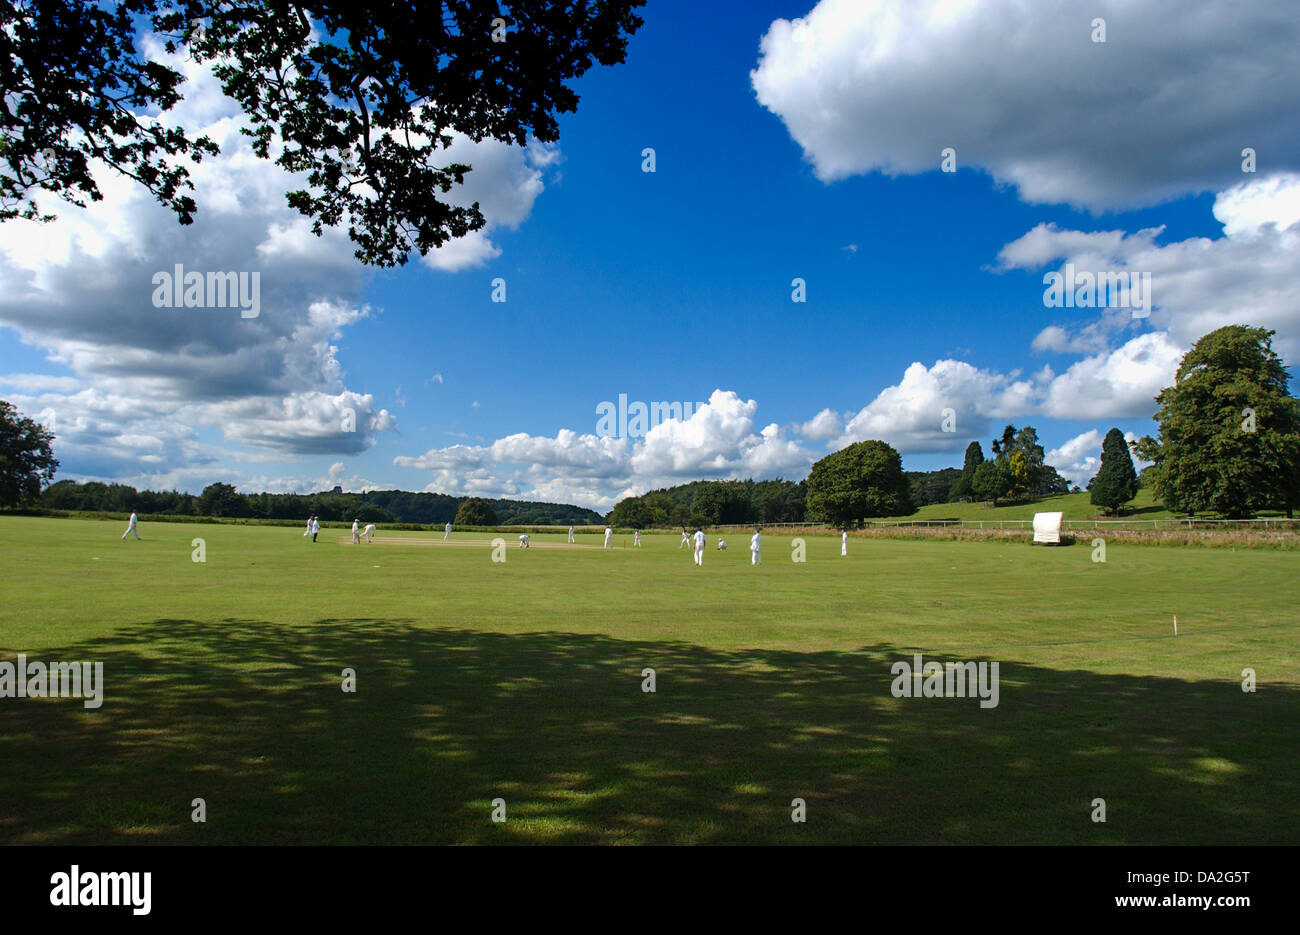 Harcourt county cricket ground, Stanton Upon Hine Heath, Shropshire, England Stock Photo